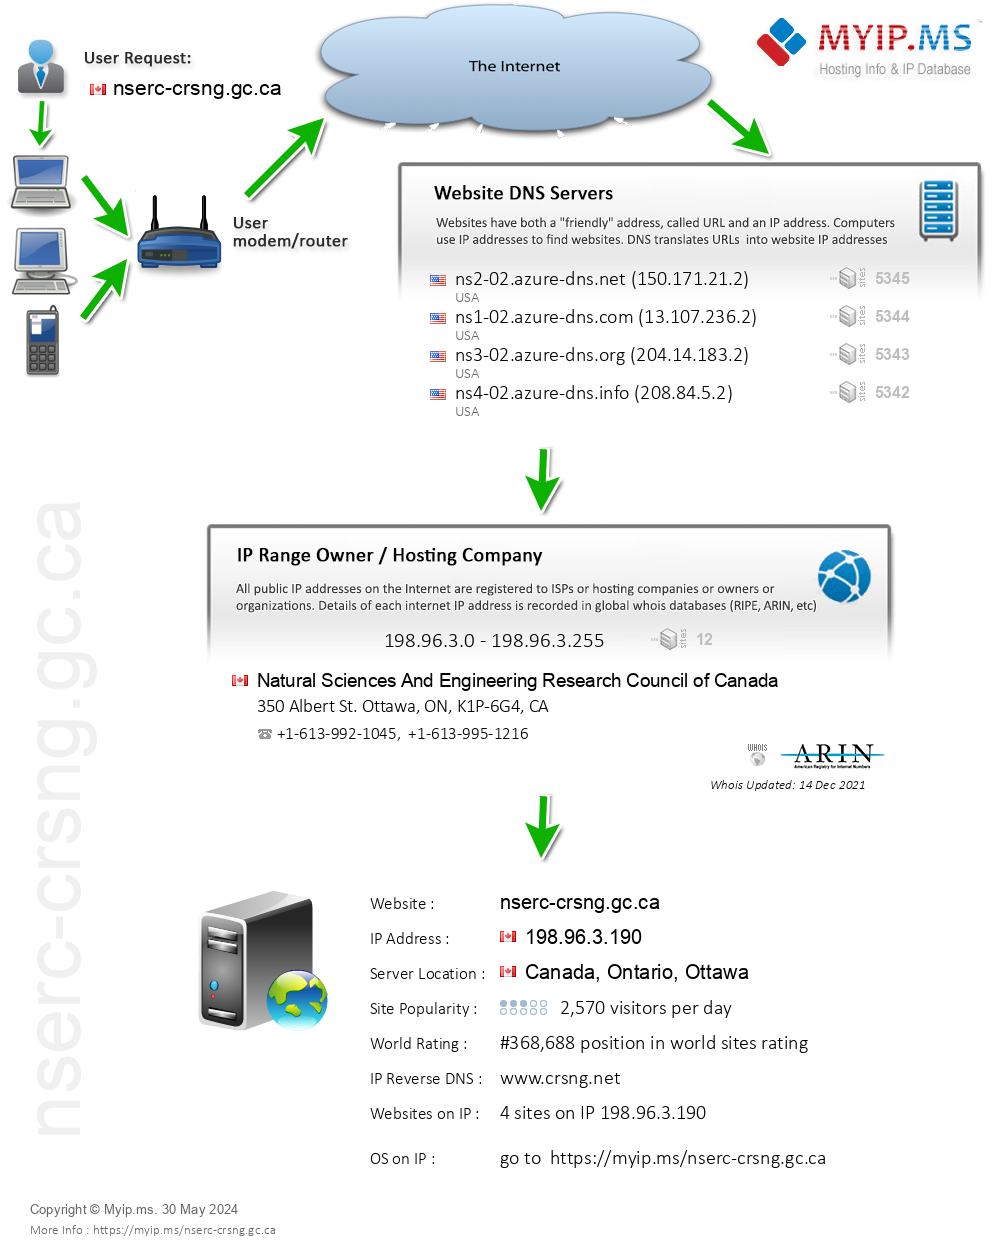 Nserc-crsng.gc.ca - Website Hosting Visual IP Diagram